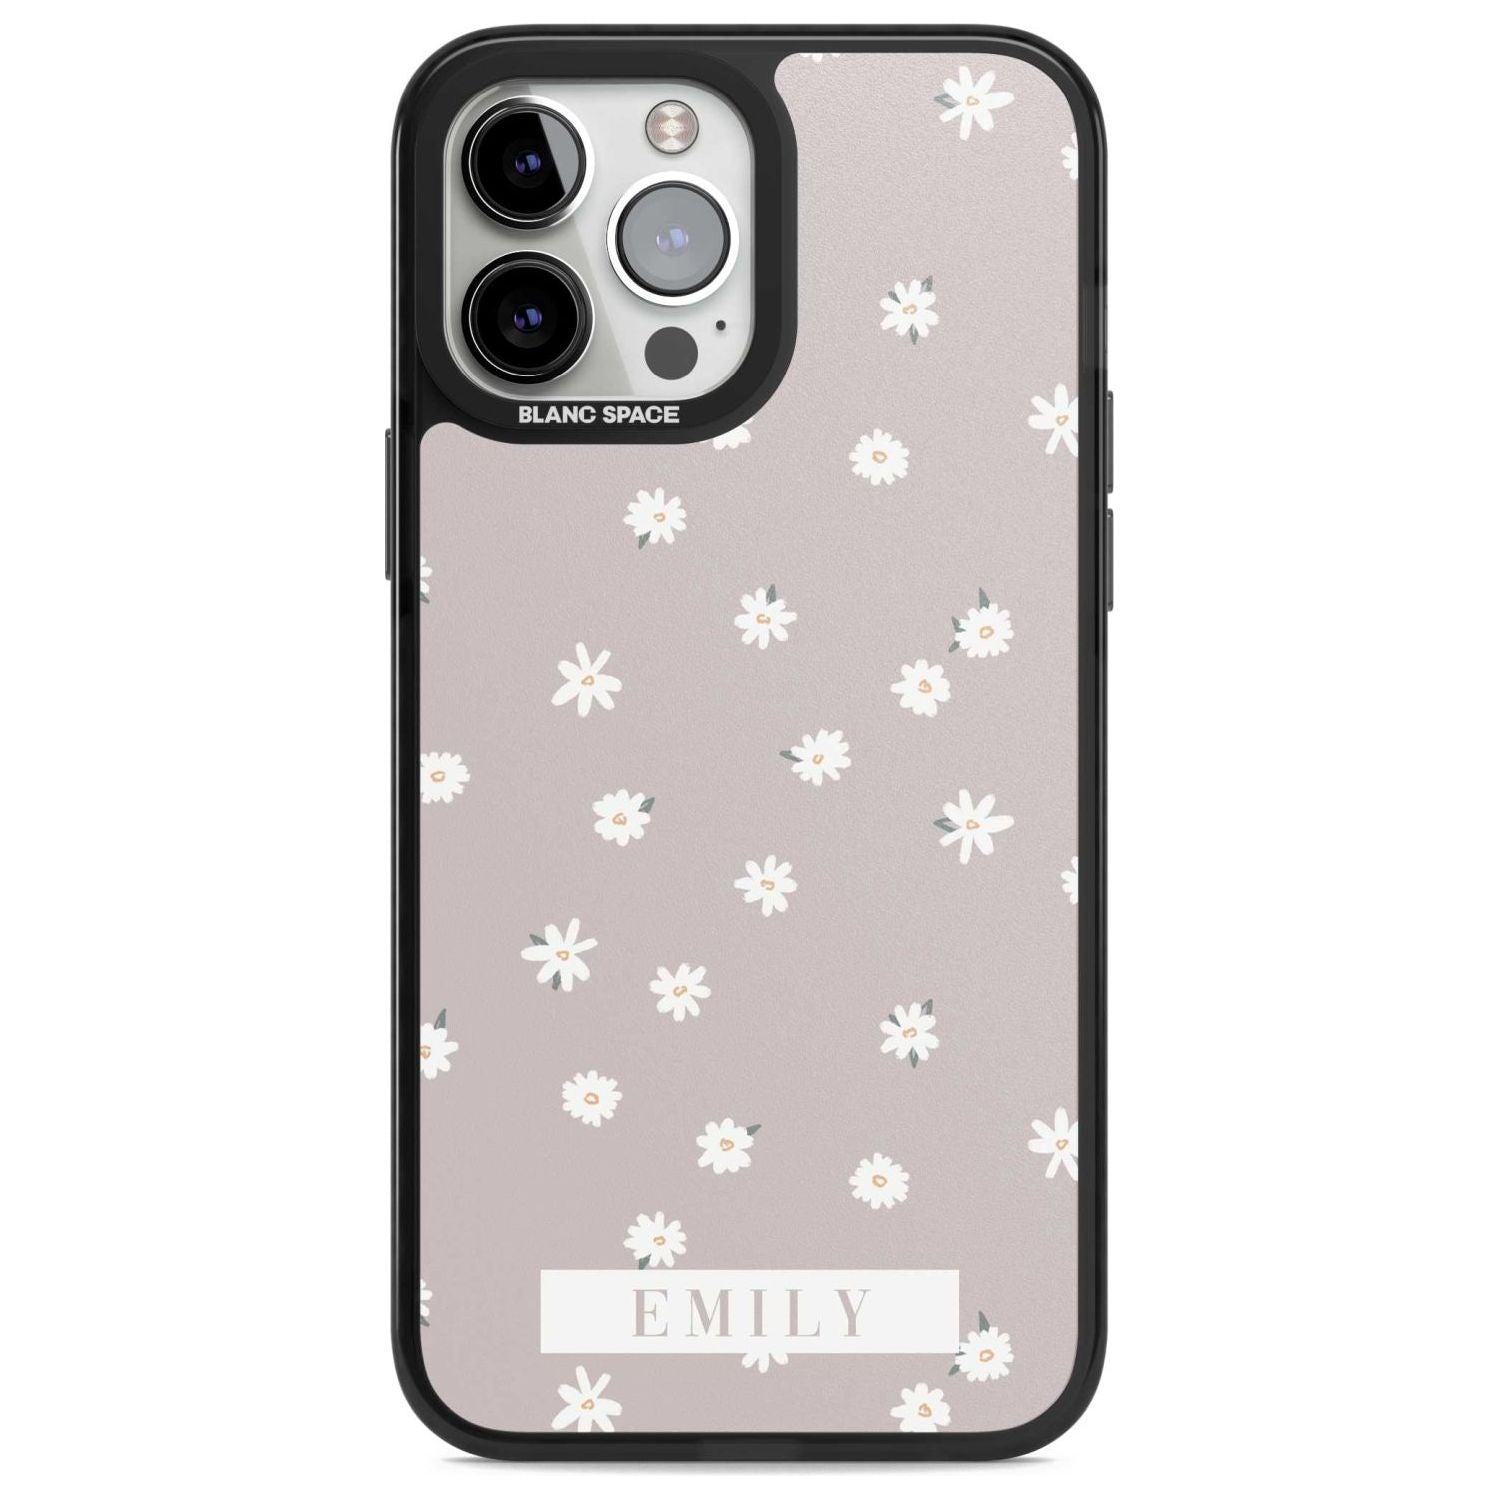 Personalised Dusty Rose Personalised Custom Phone Case iPhone 13 Pro Max / Magsafe Black Impact Case Blanc Space